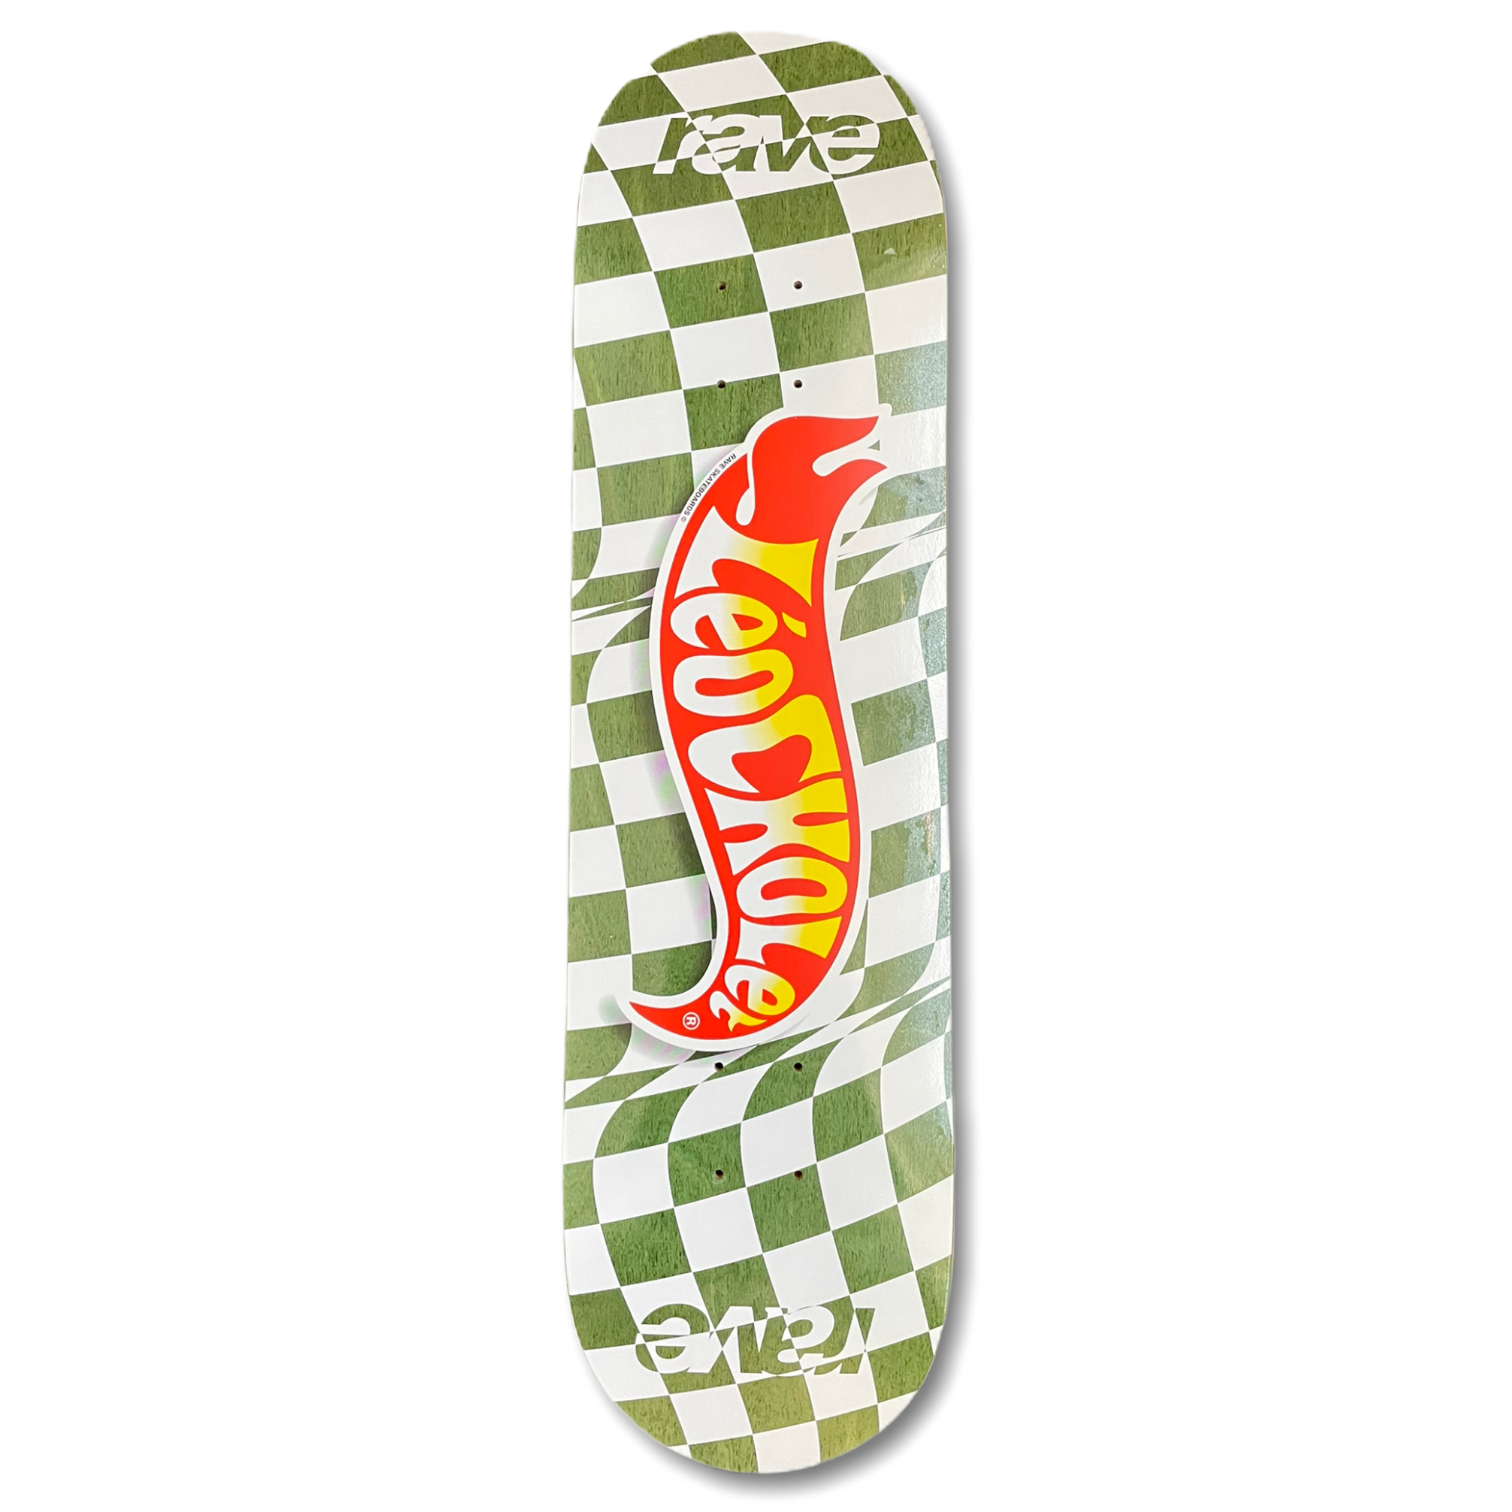 LEO CHOLET PRO board - RAVE skateboards